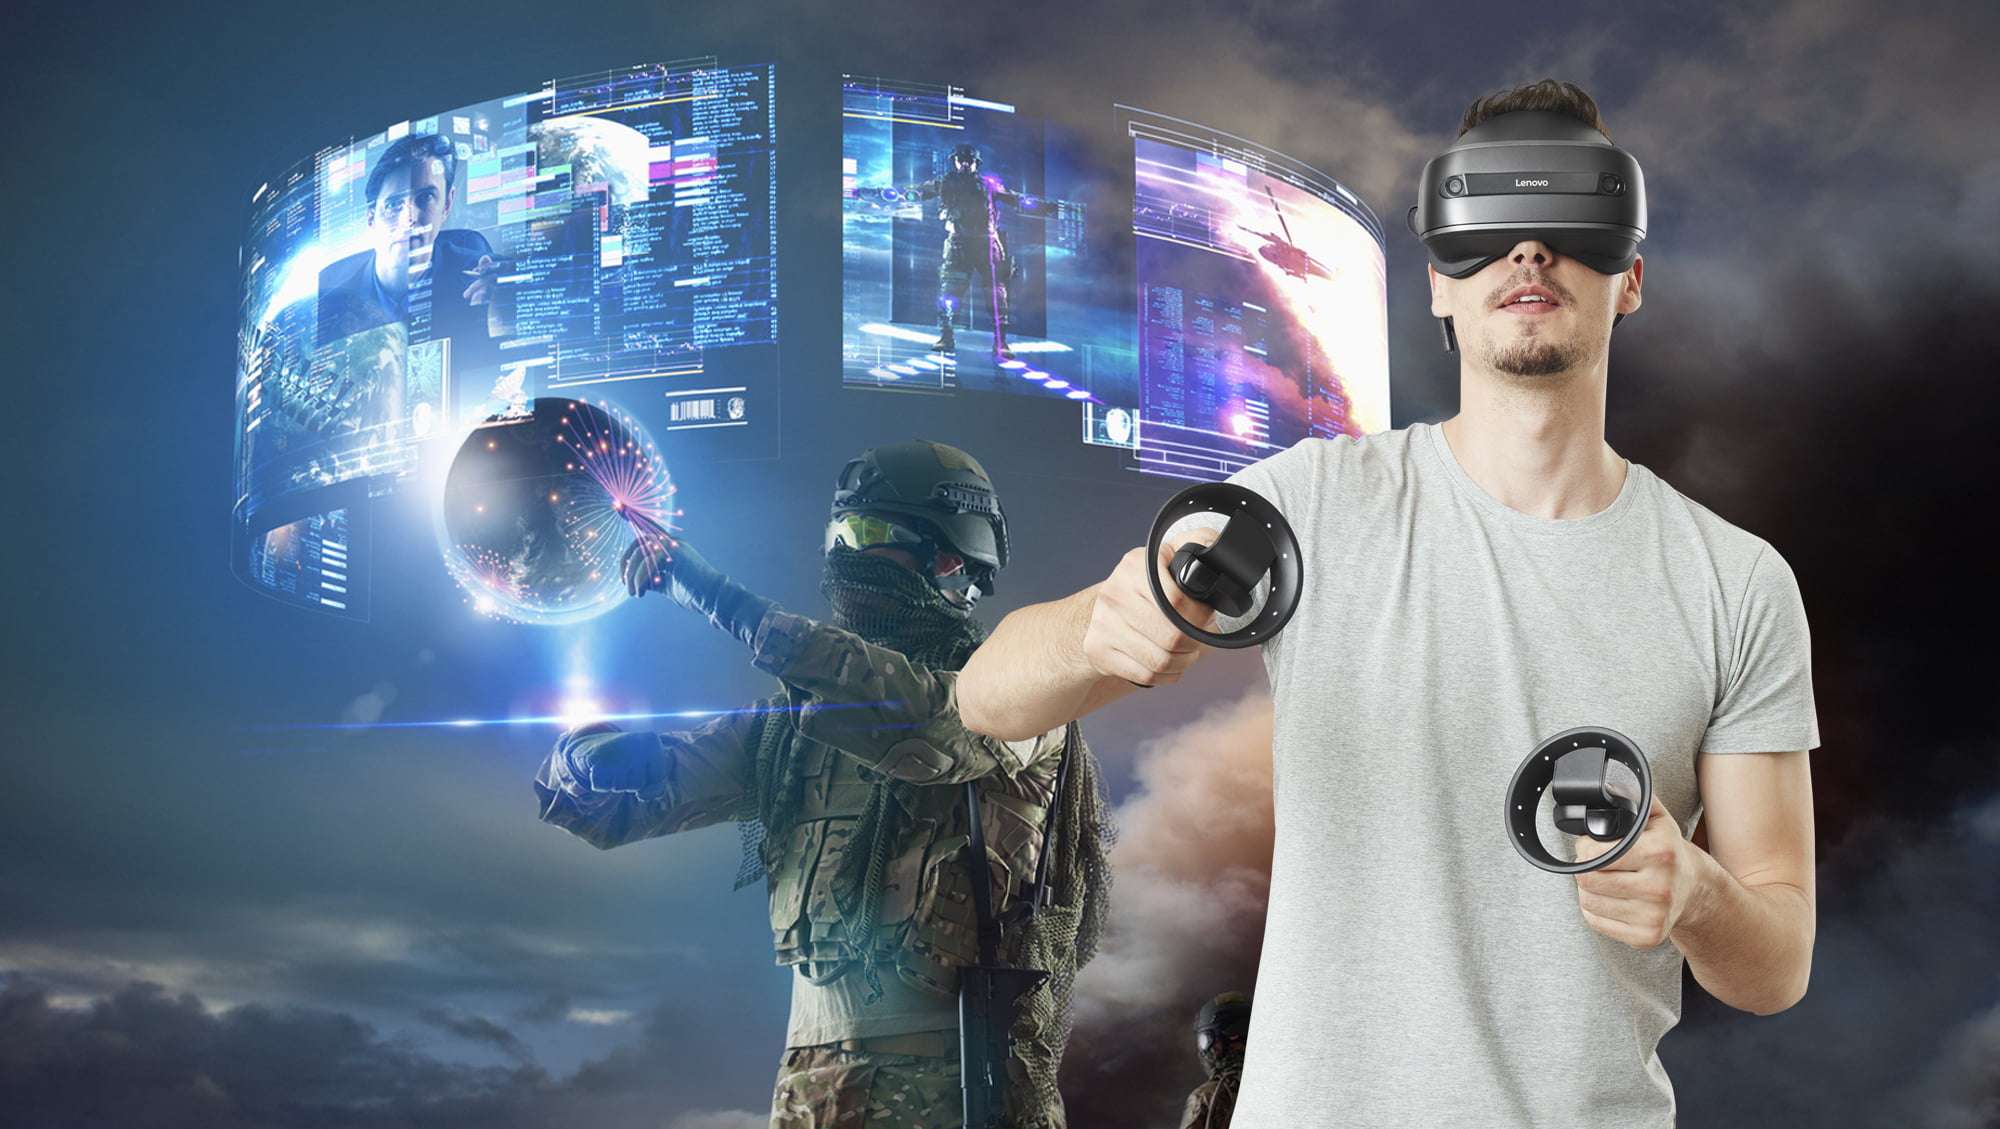 Vr type. Очки виртуальной реальности. Виртуальная реальность 2021. Игровая виртуальная реальность. Виртуальнаяяреальность.